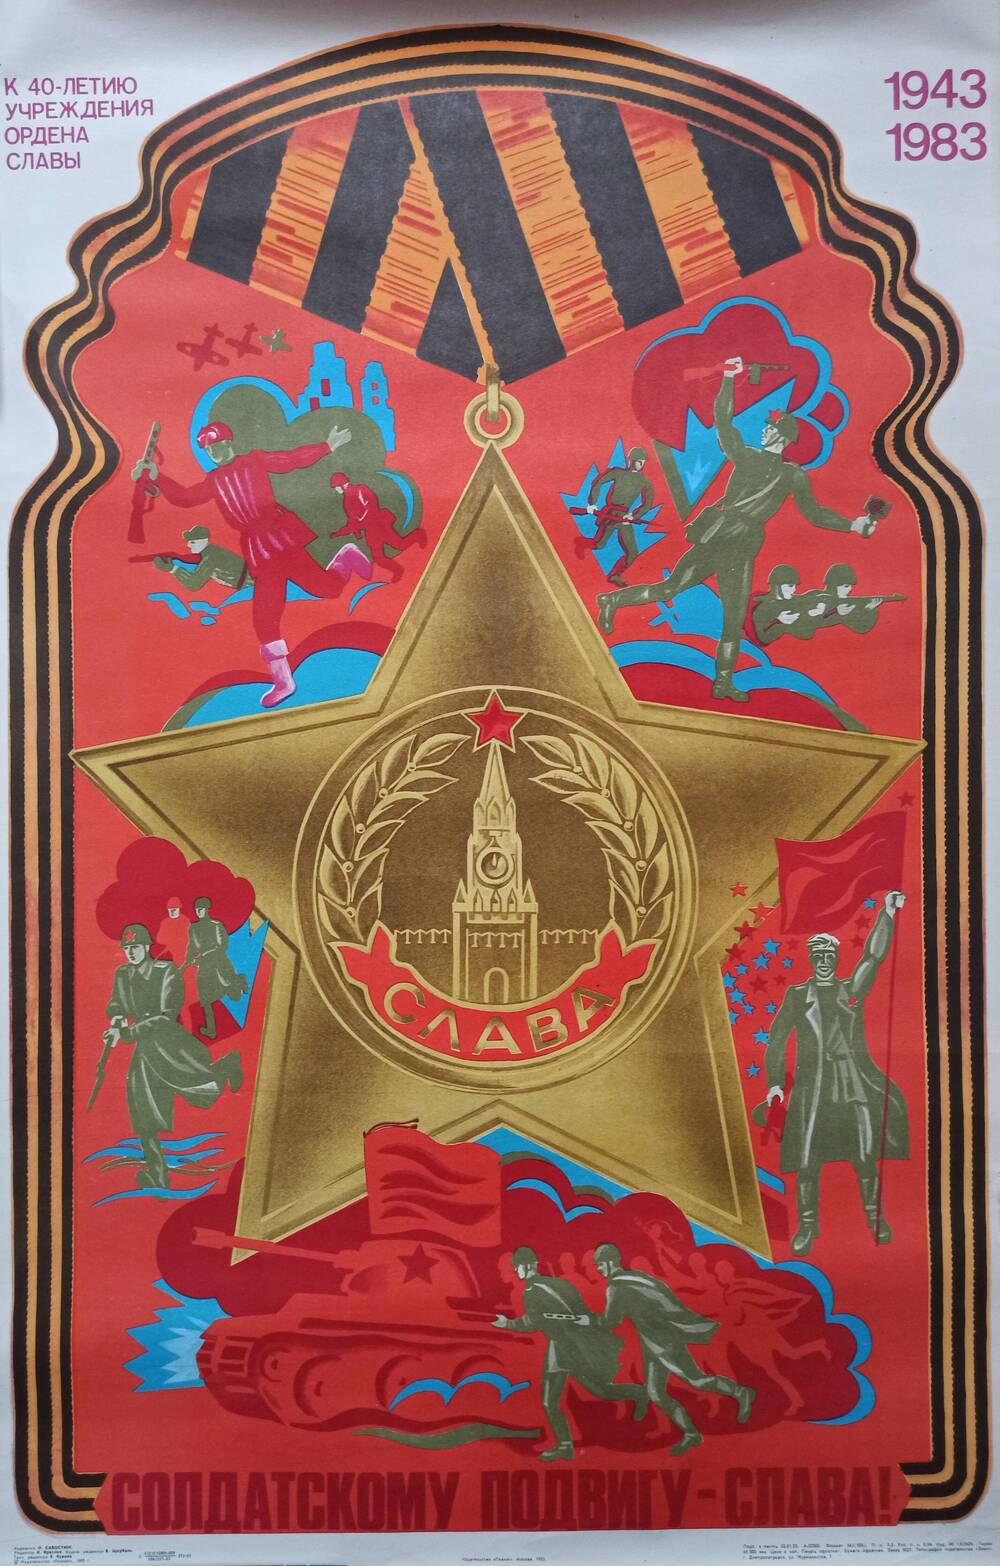 Плакат 
«Солдатскому подвигу – слава!»